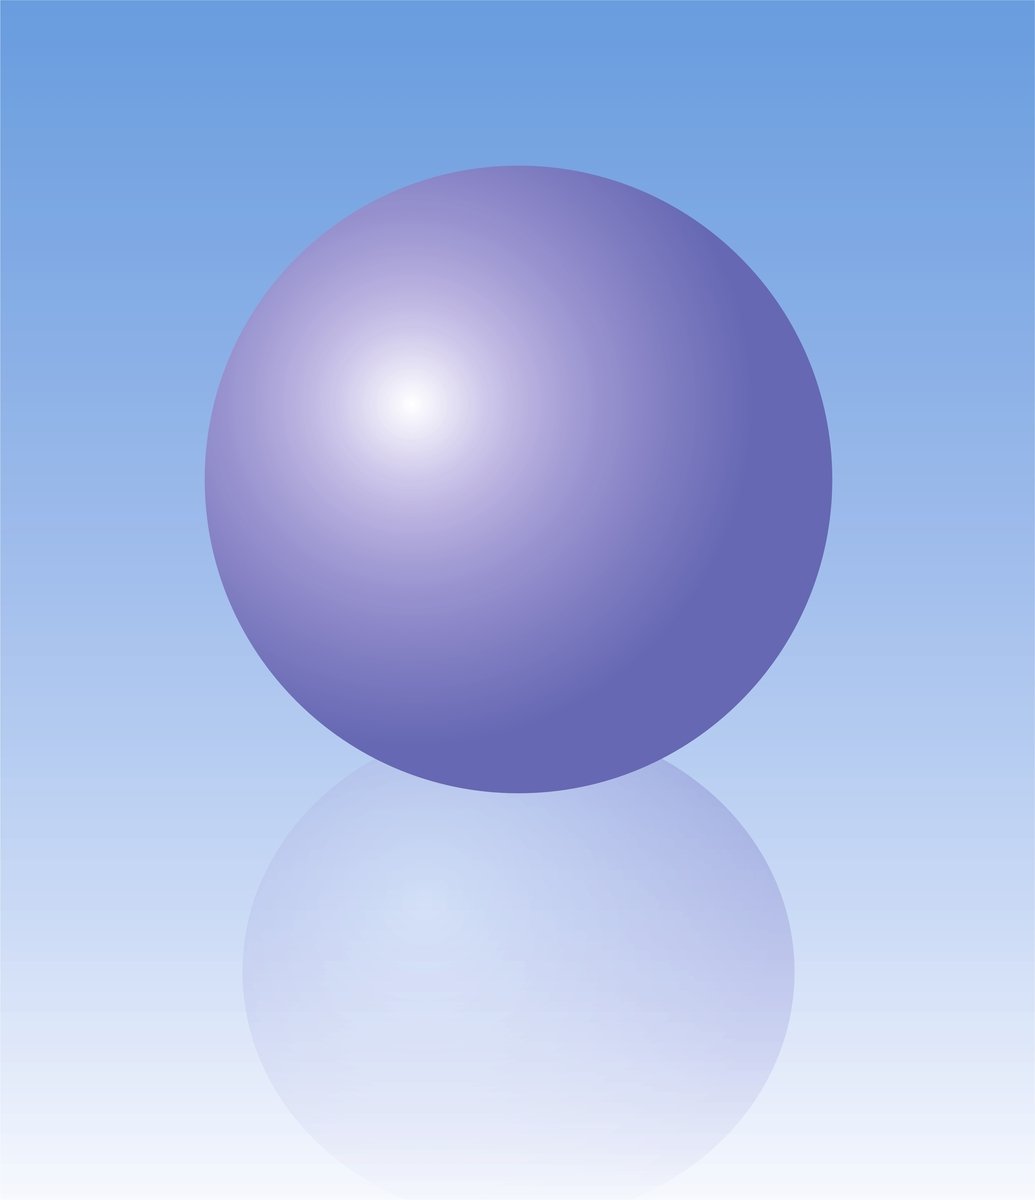 a purple ball on a light blue background